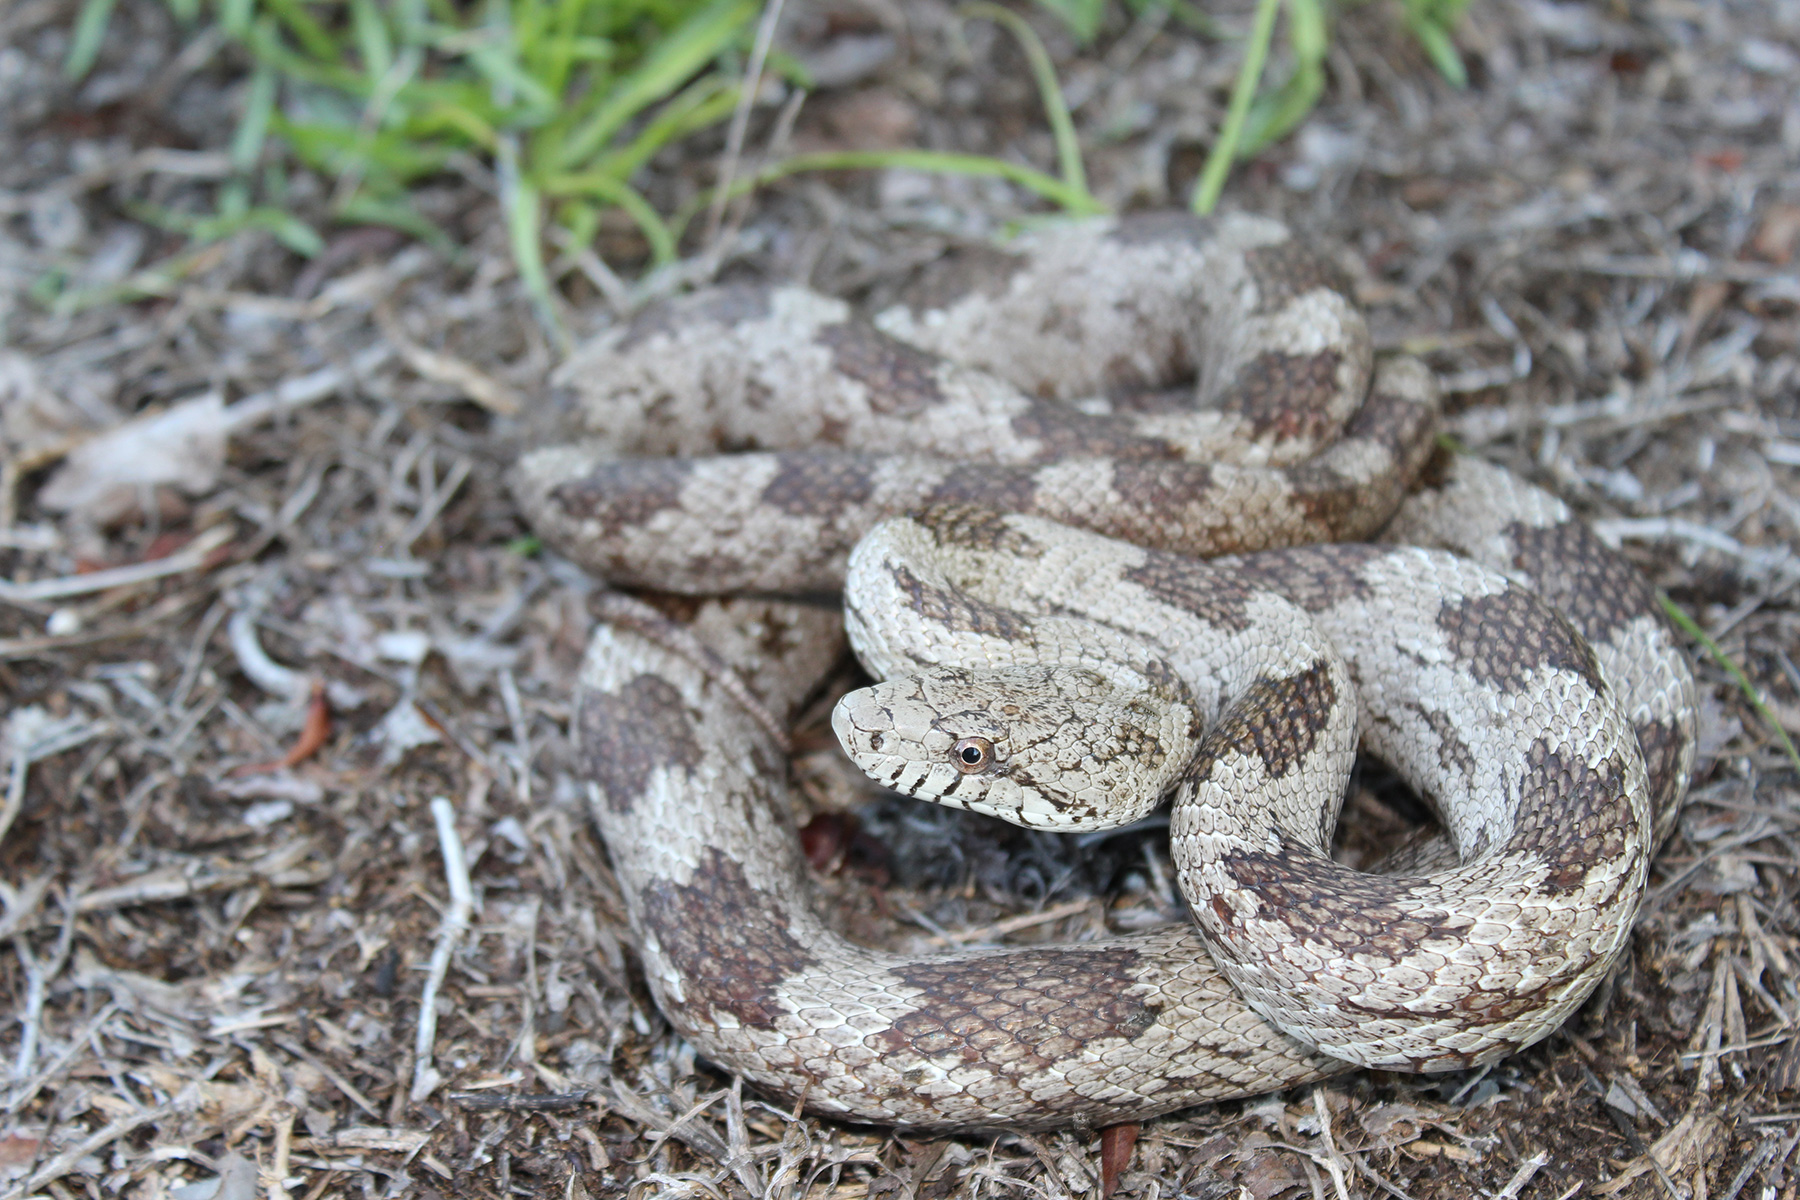 identifying baby snakes in alabama